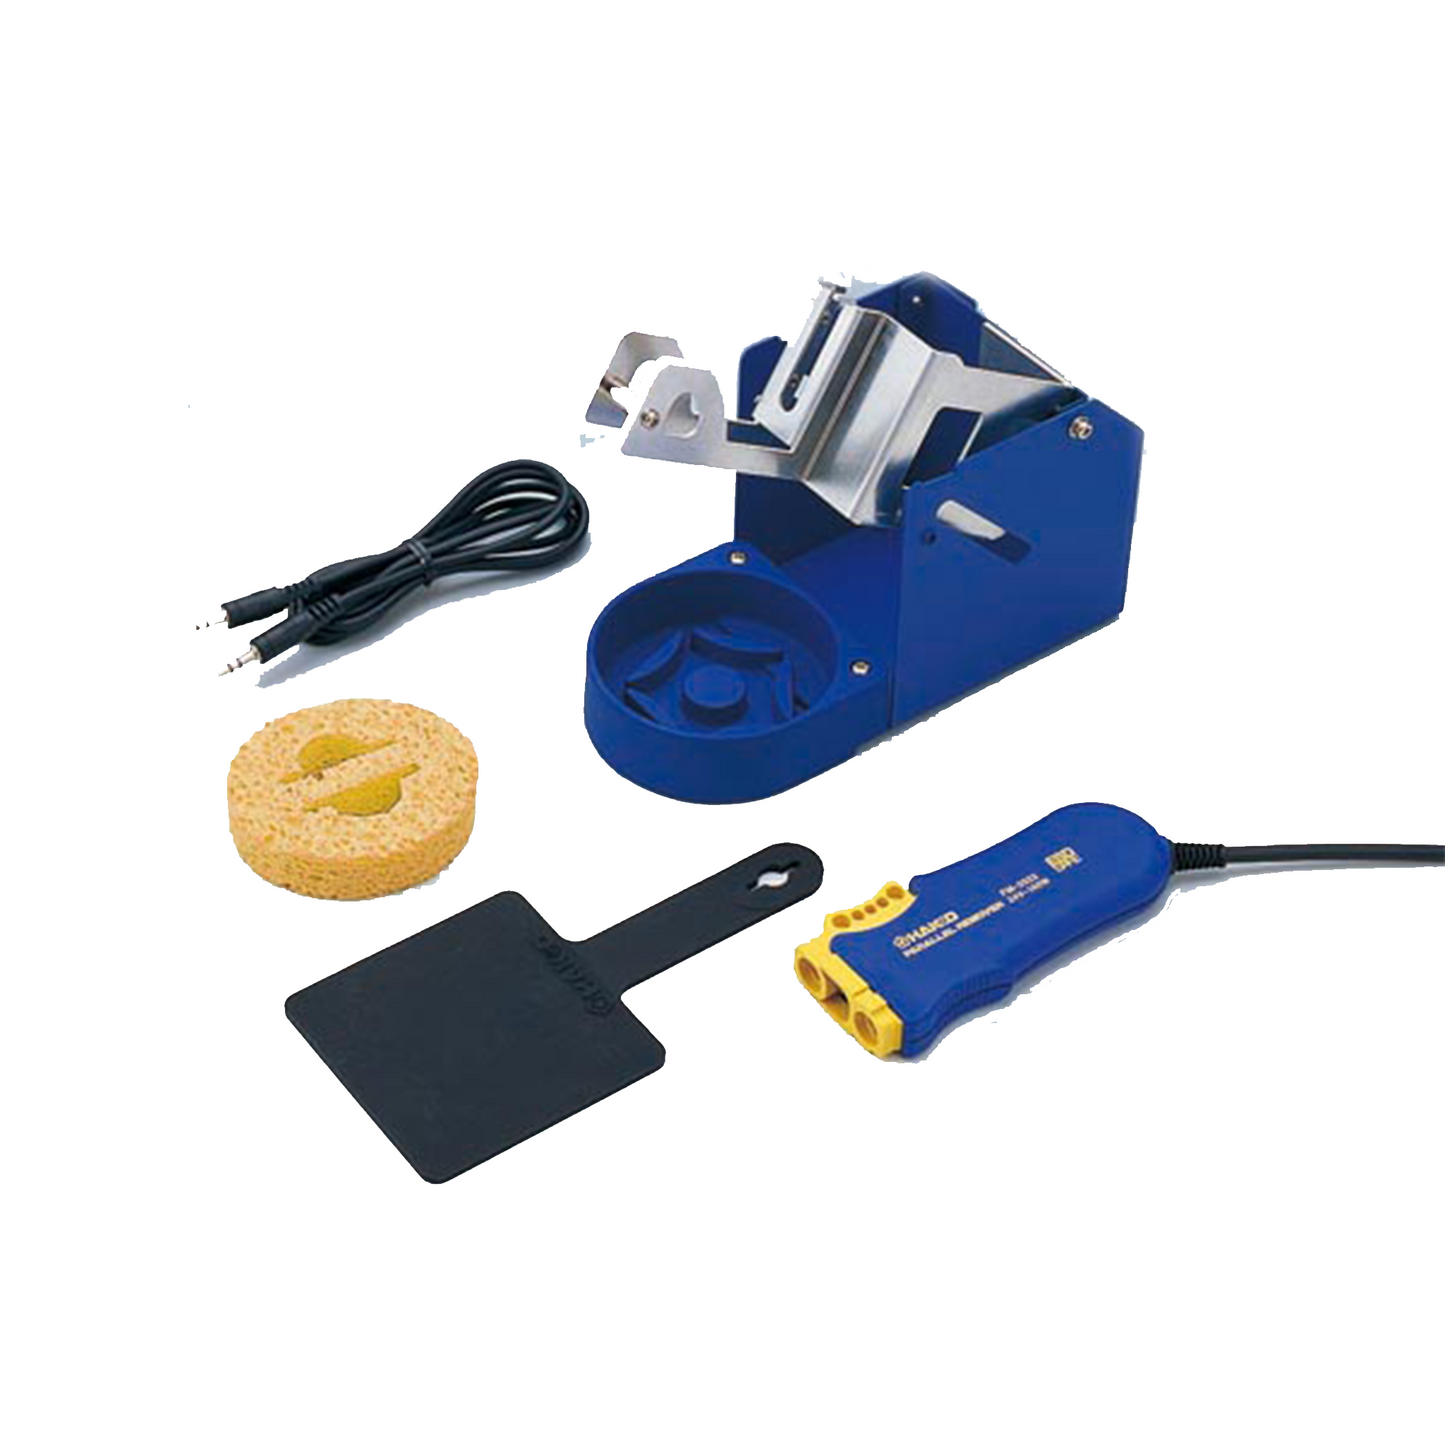 Hakko_ FM-2023 Mini SMD Hot Tweezers Handpiece / Conversion Kit_ Soldering Iron_ Hakko Products with iron stand cleaning sponge